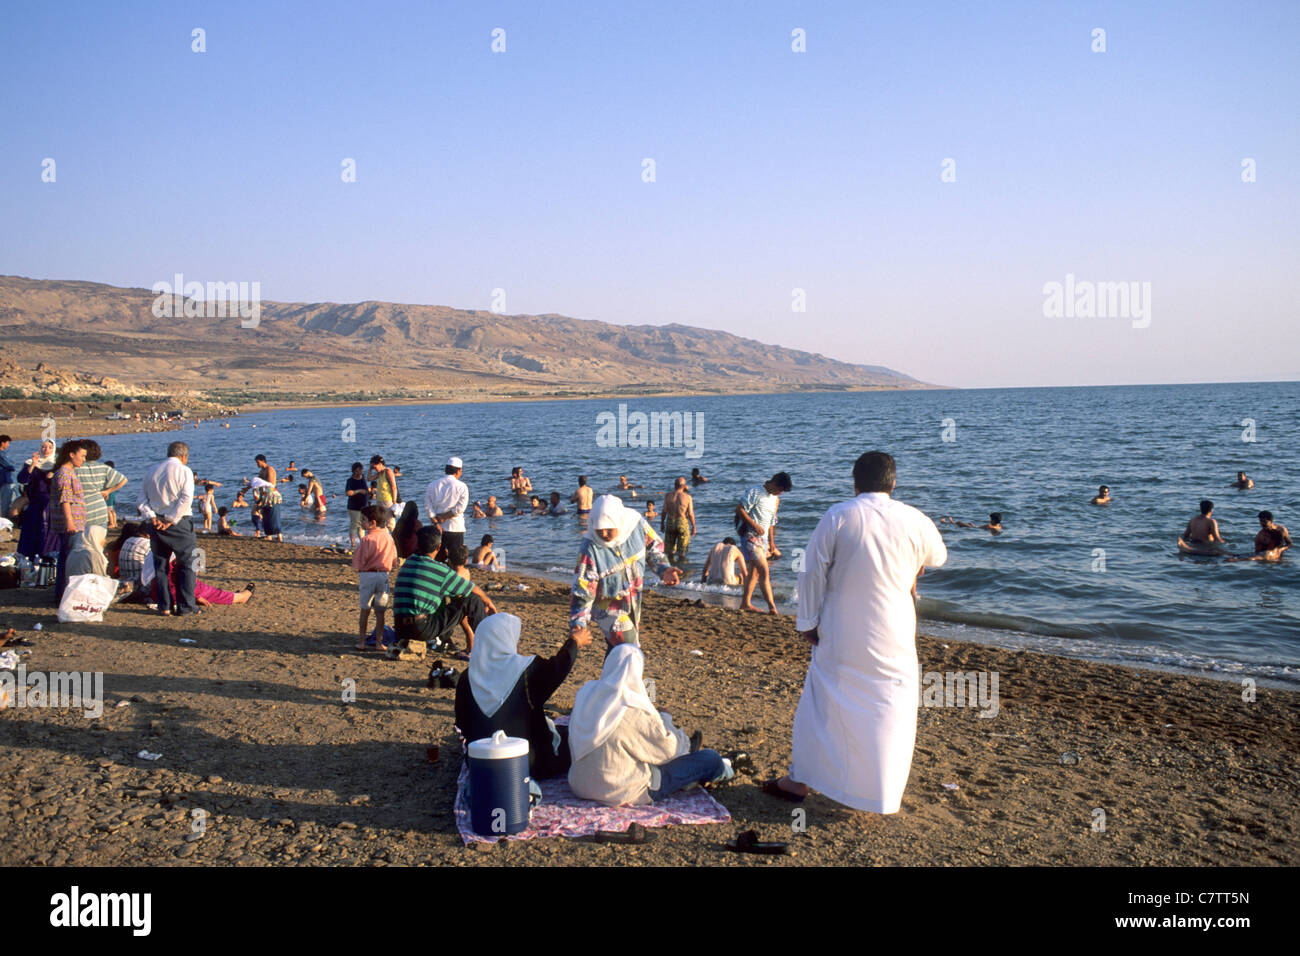 Jordan, Dead Sea, people on beach Stock Photo - Alamy